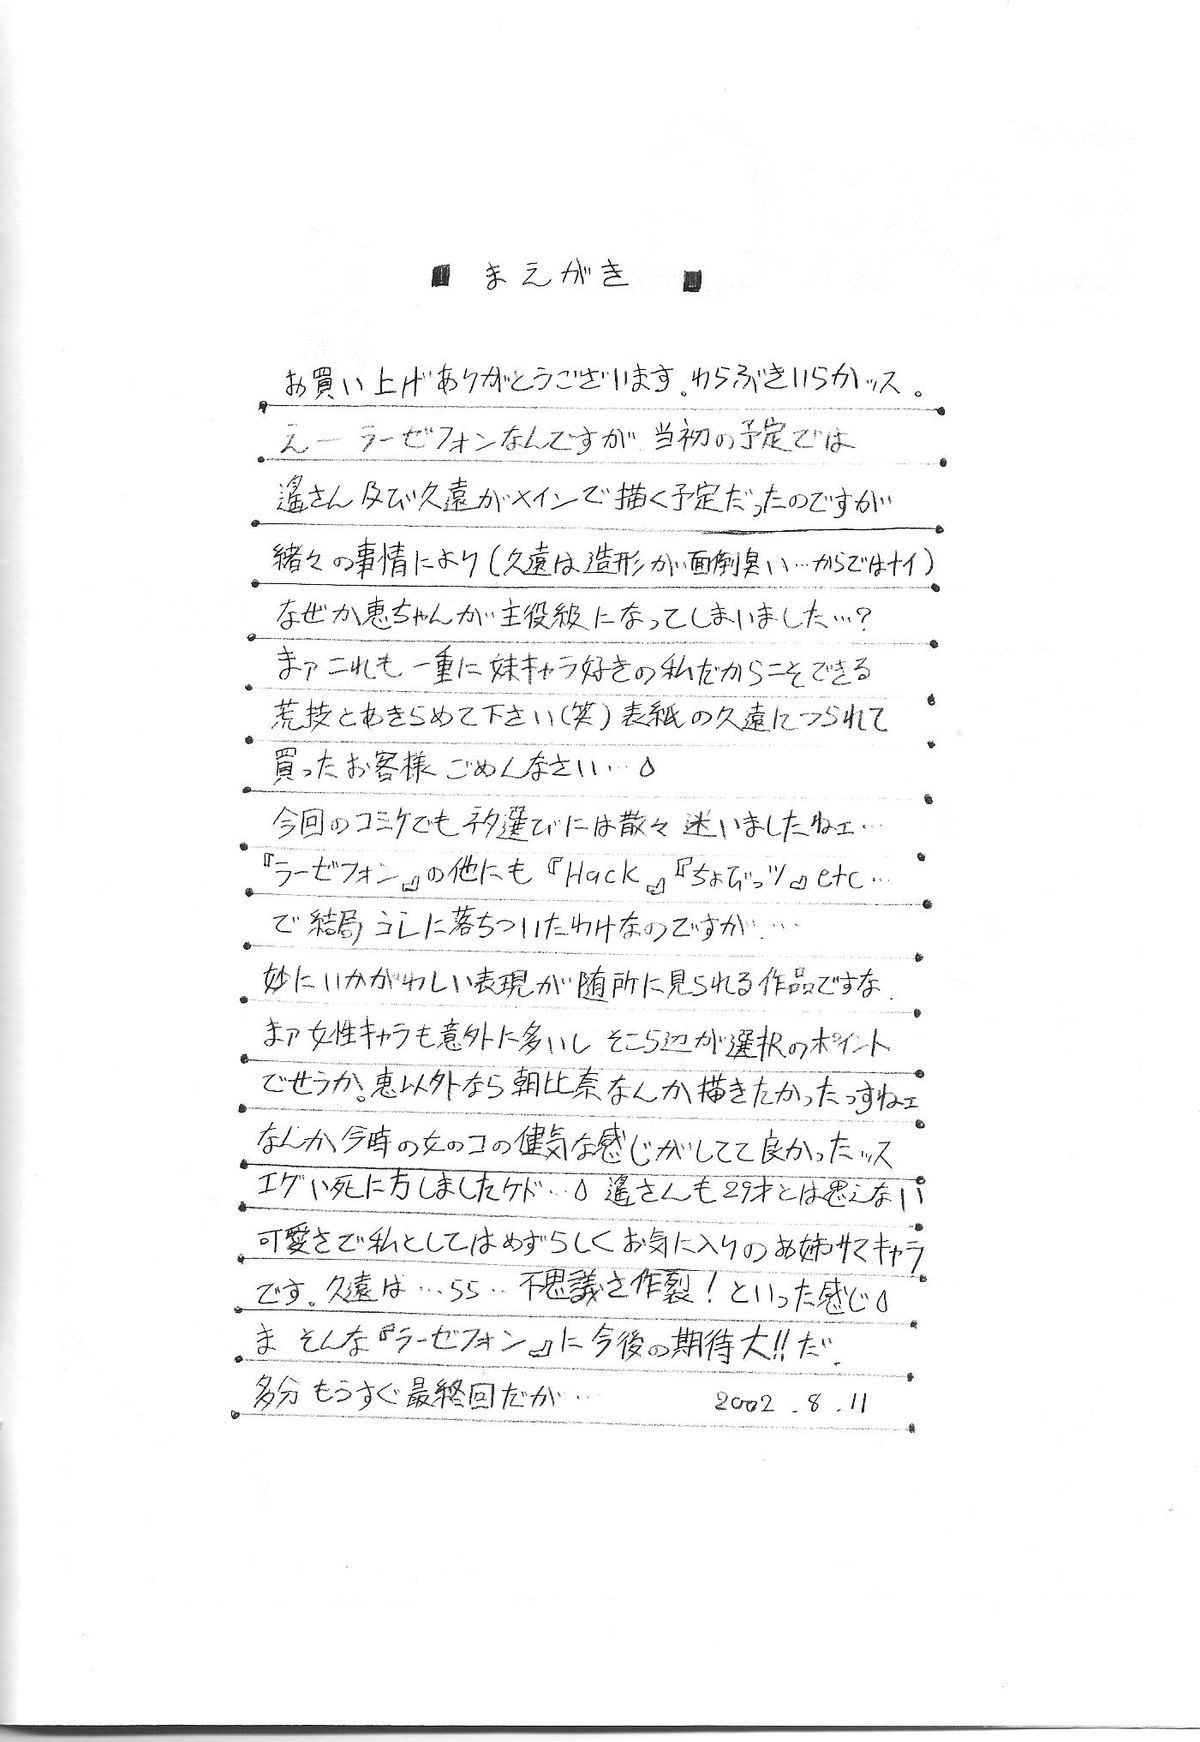 (C62) [ぺんてる工房 (ぺんてる少佐)] E CAN G vol.8 (ラーゼフォン)